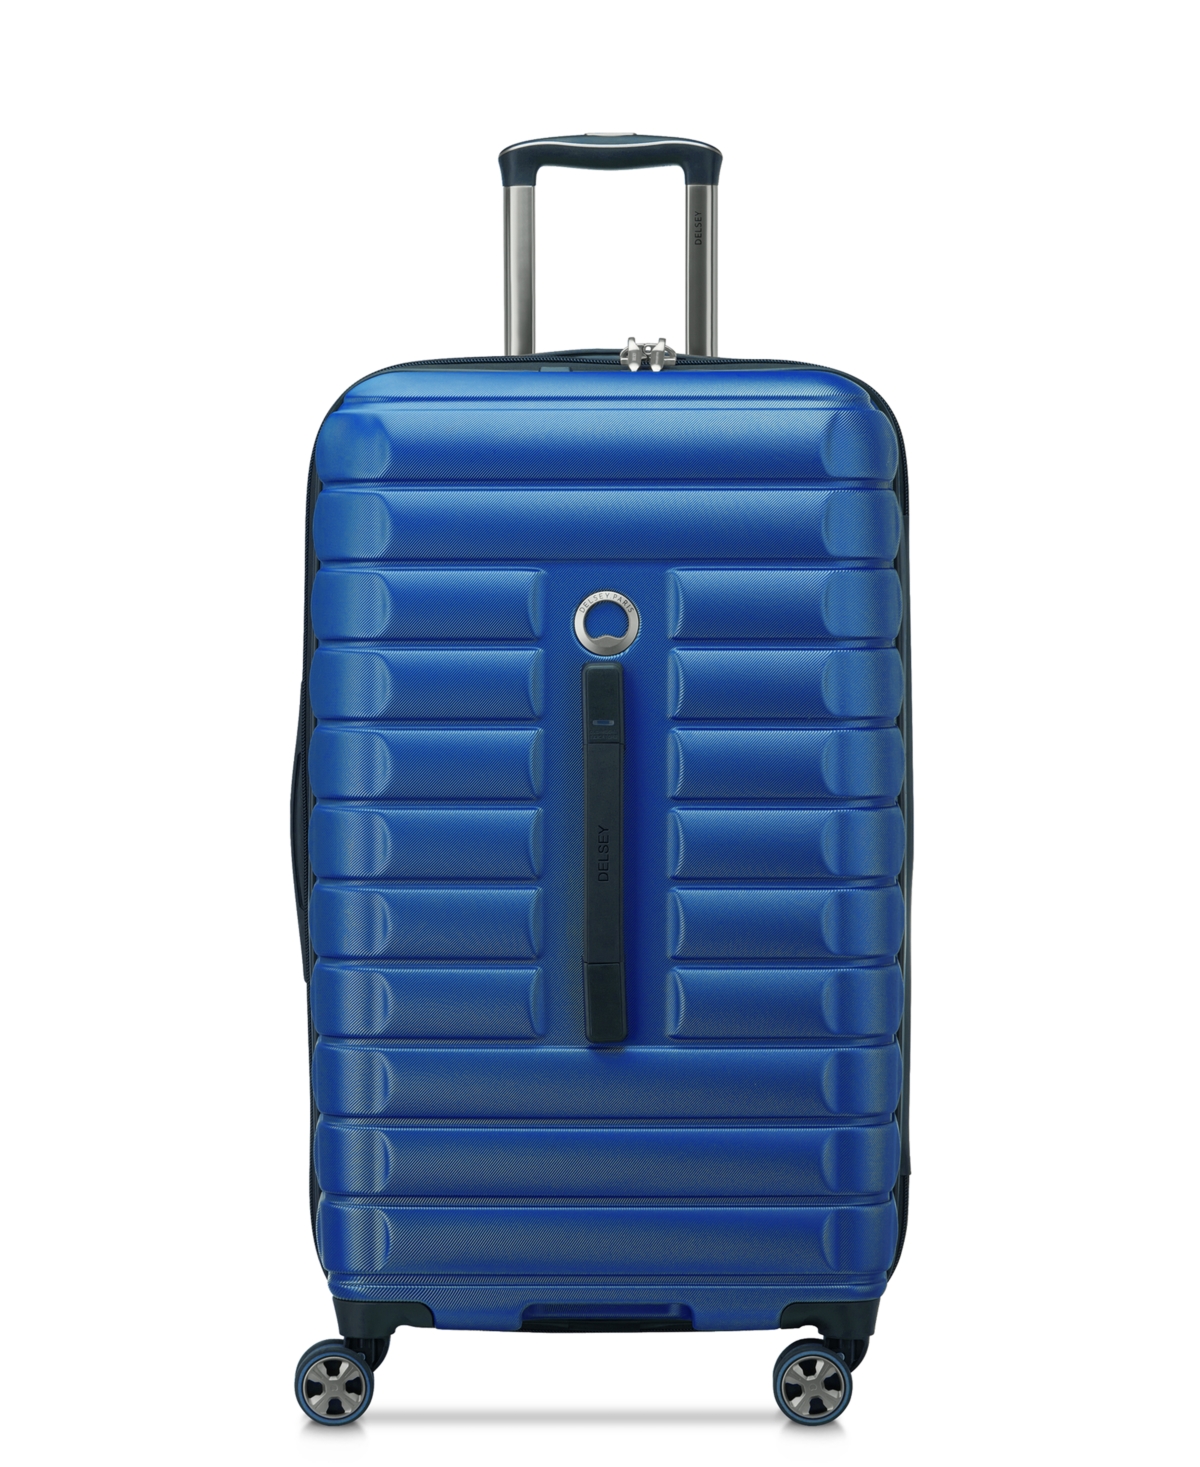 Shadow 5.0 Trunk 27" Spinner Luggage - Cobalt Blue